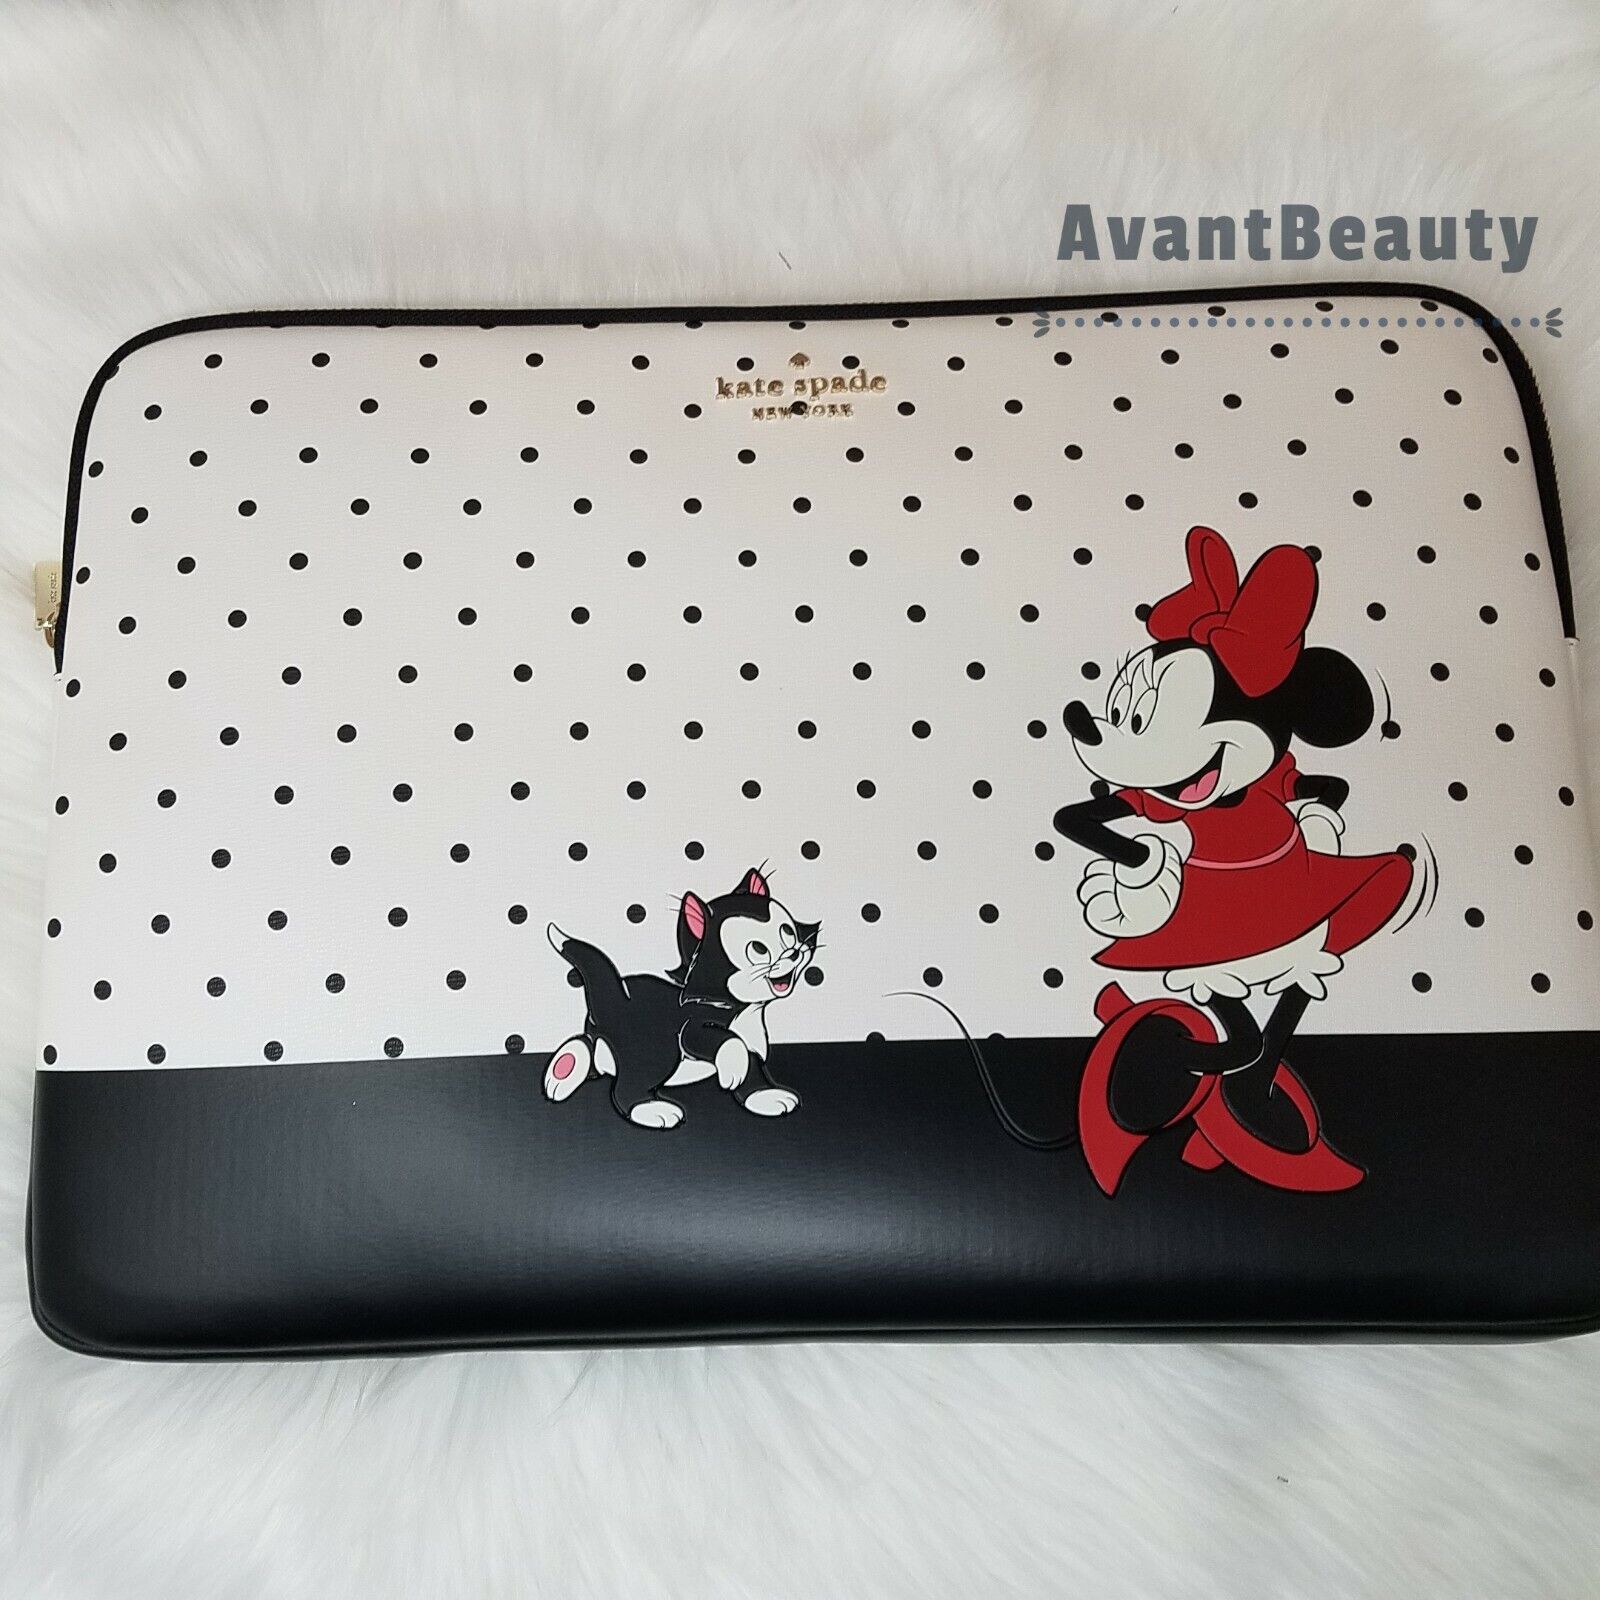 Kate Spade Disney X Kate Spade Minnie Universal Laptop Sleeve Limited Edition